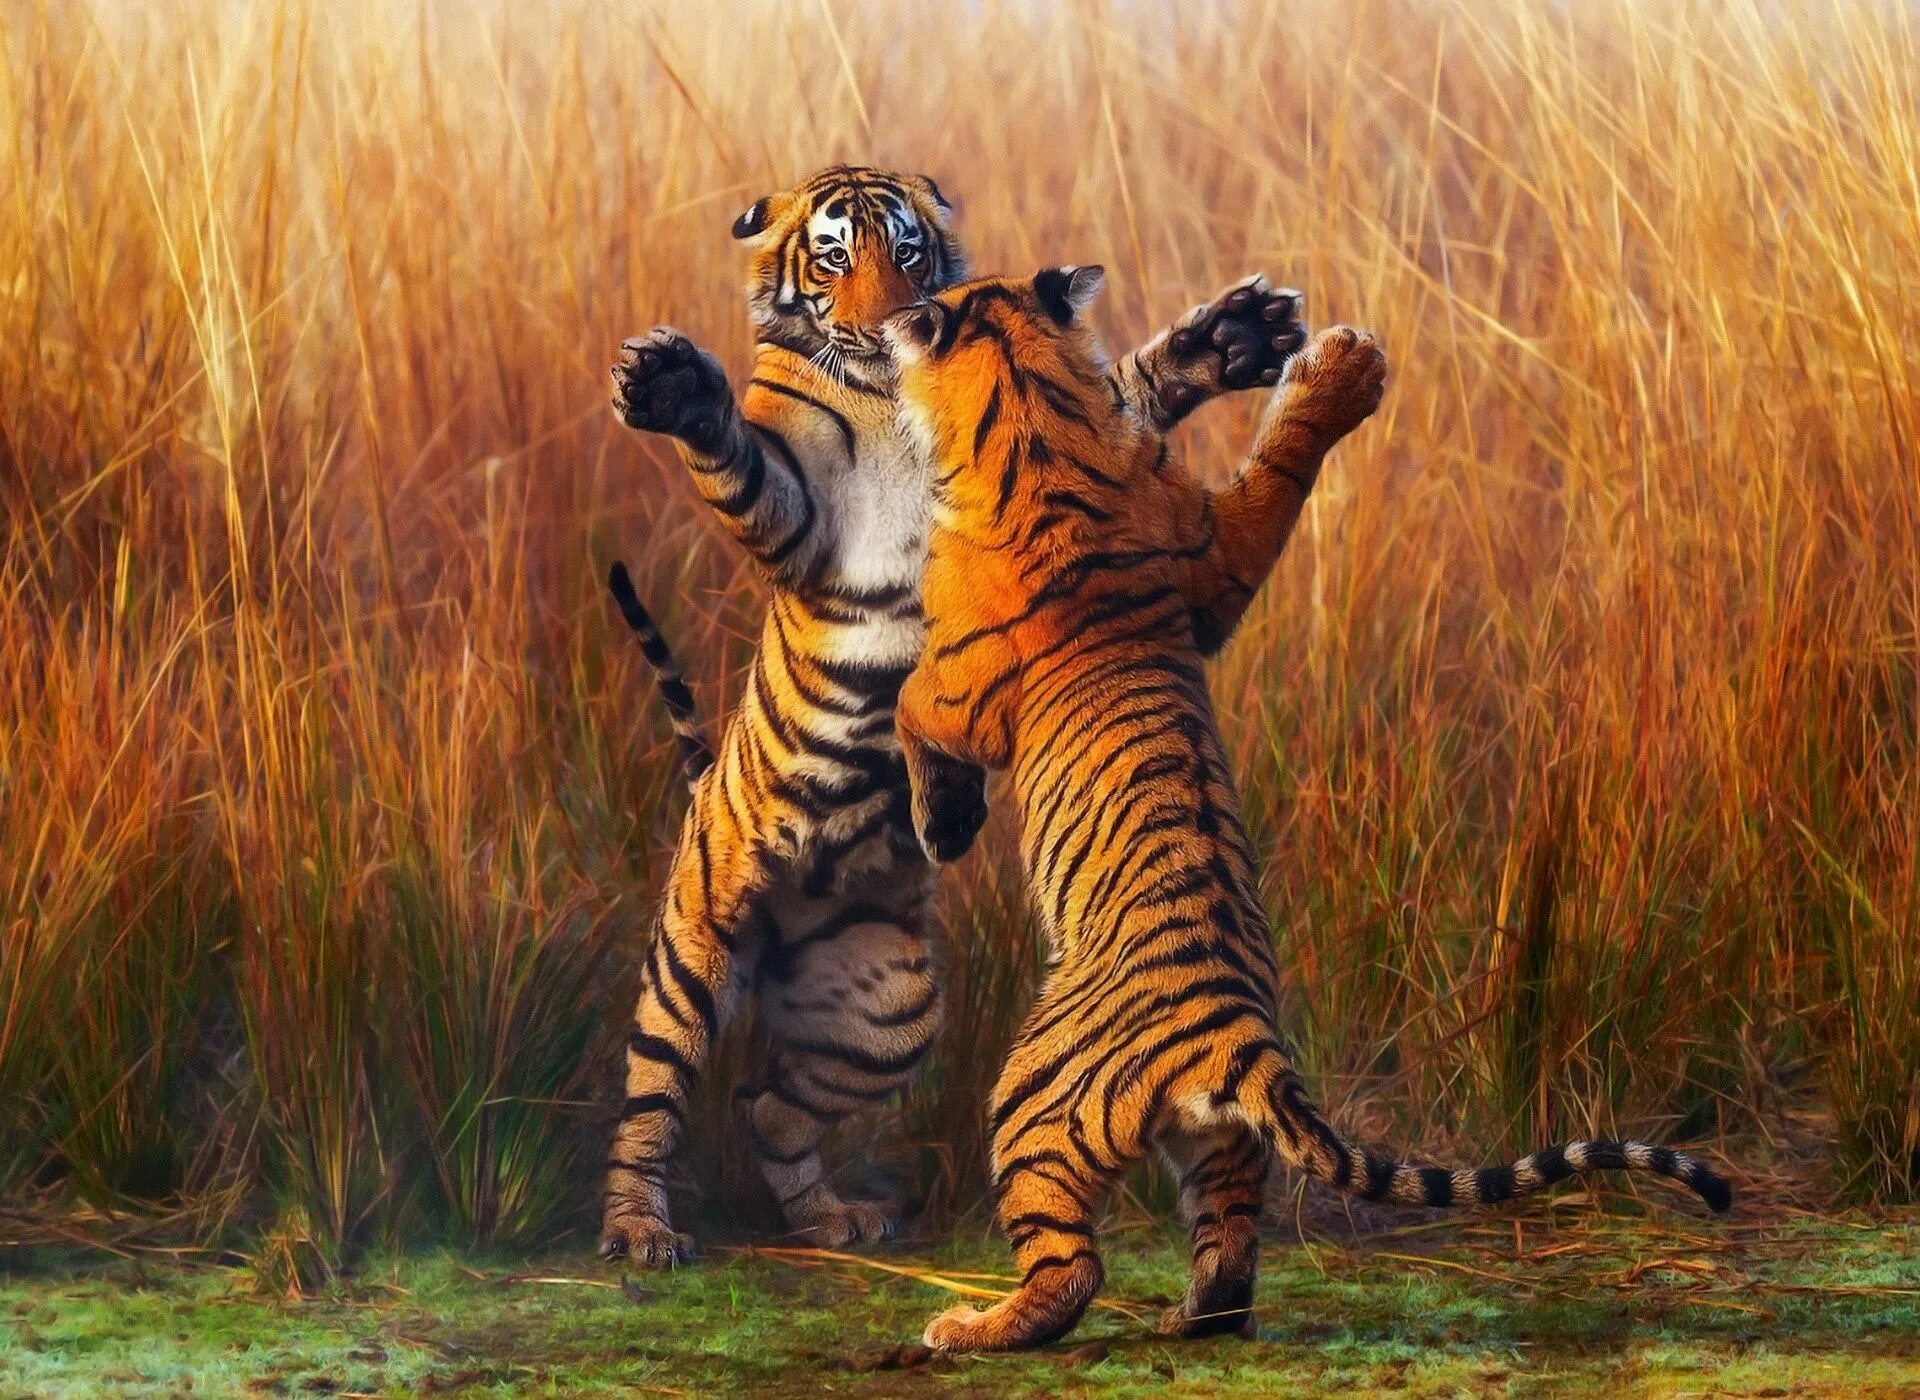 Хорош тайгер. Тигр. Тигр в дикой природе. Тигры дерутся. Дикий тигр.